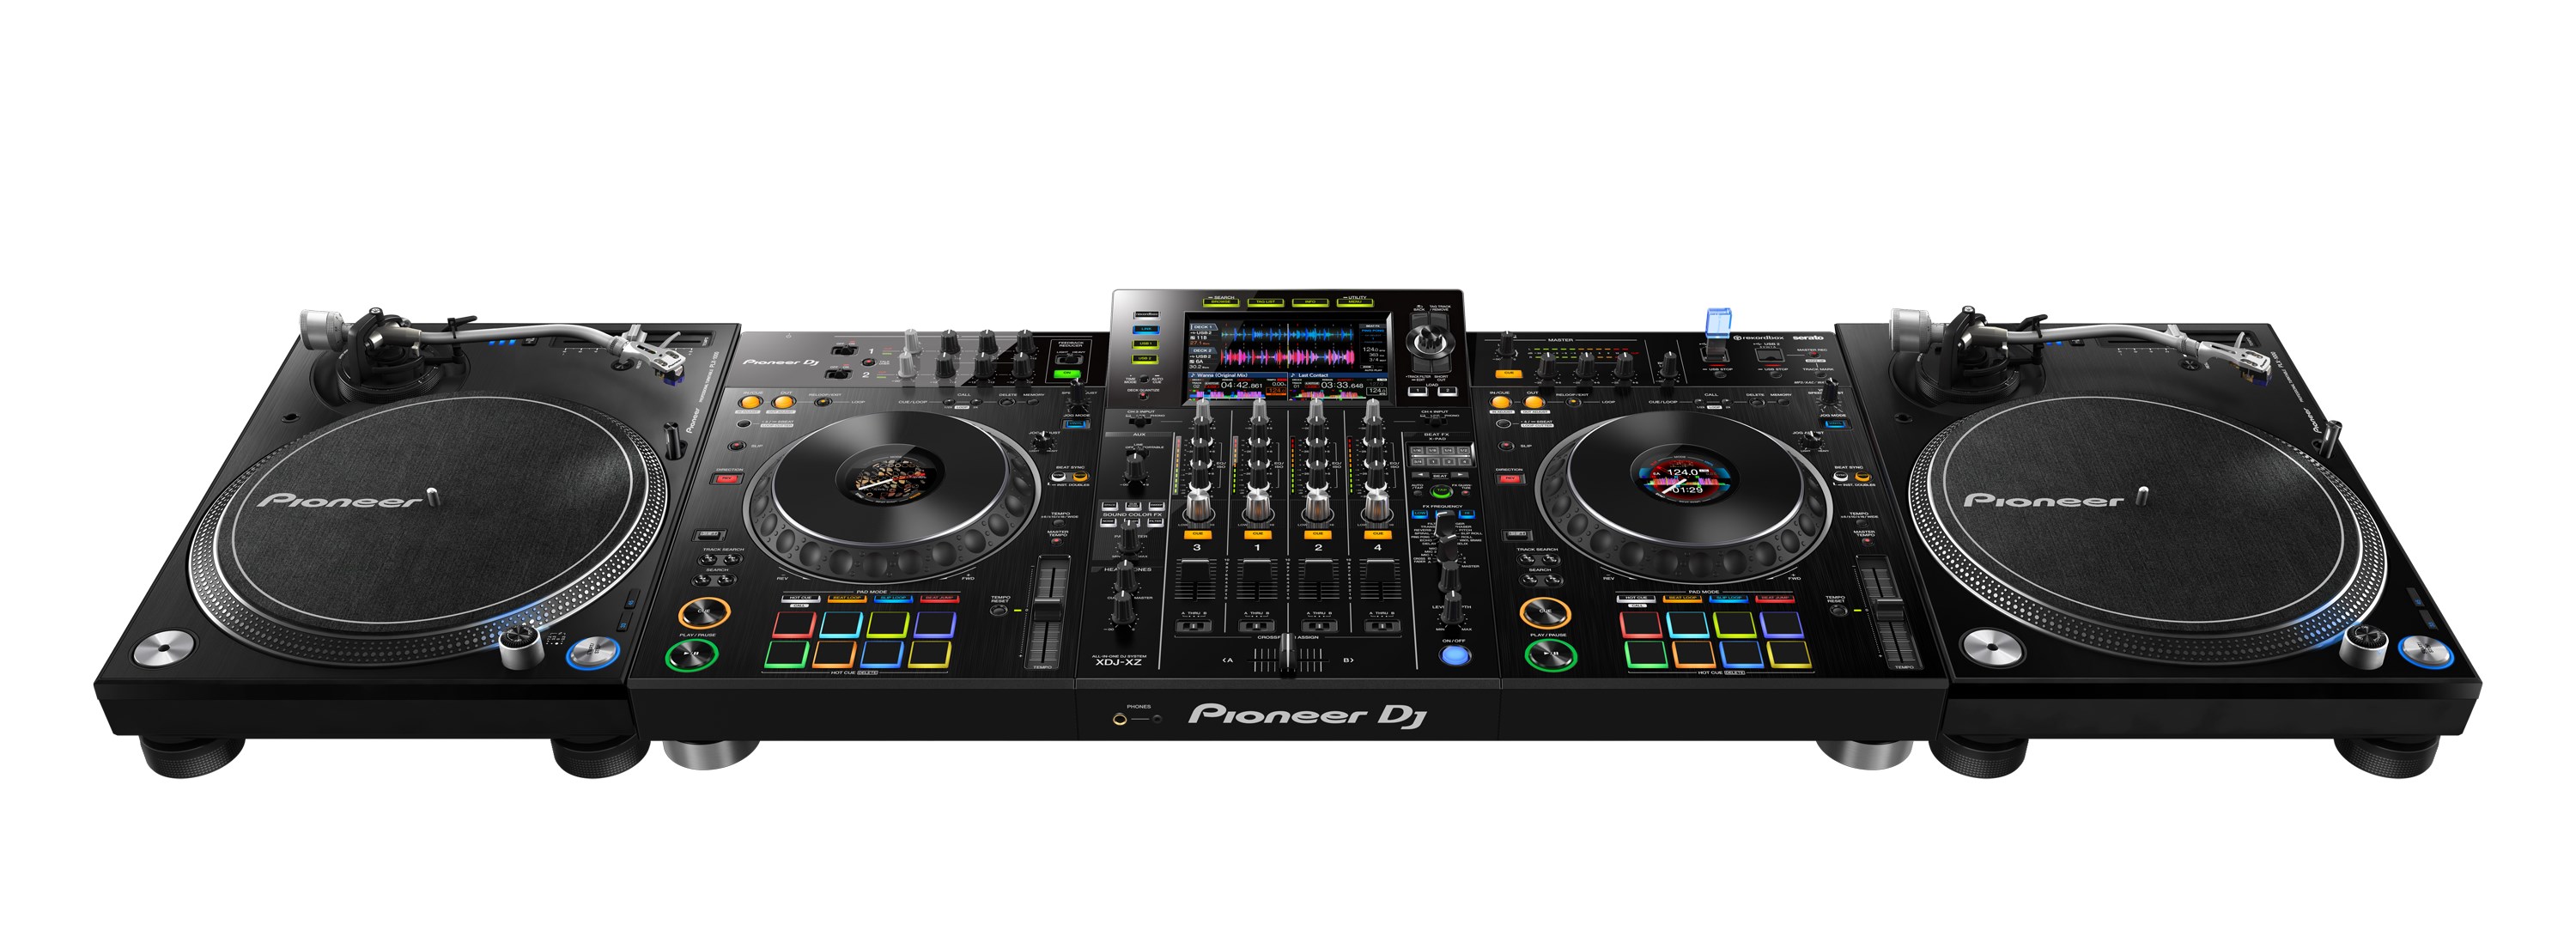 Pioneer Dj Xdj-xz - Standalone DJ Controller - Variation 4